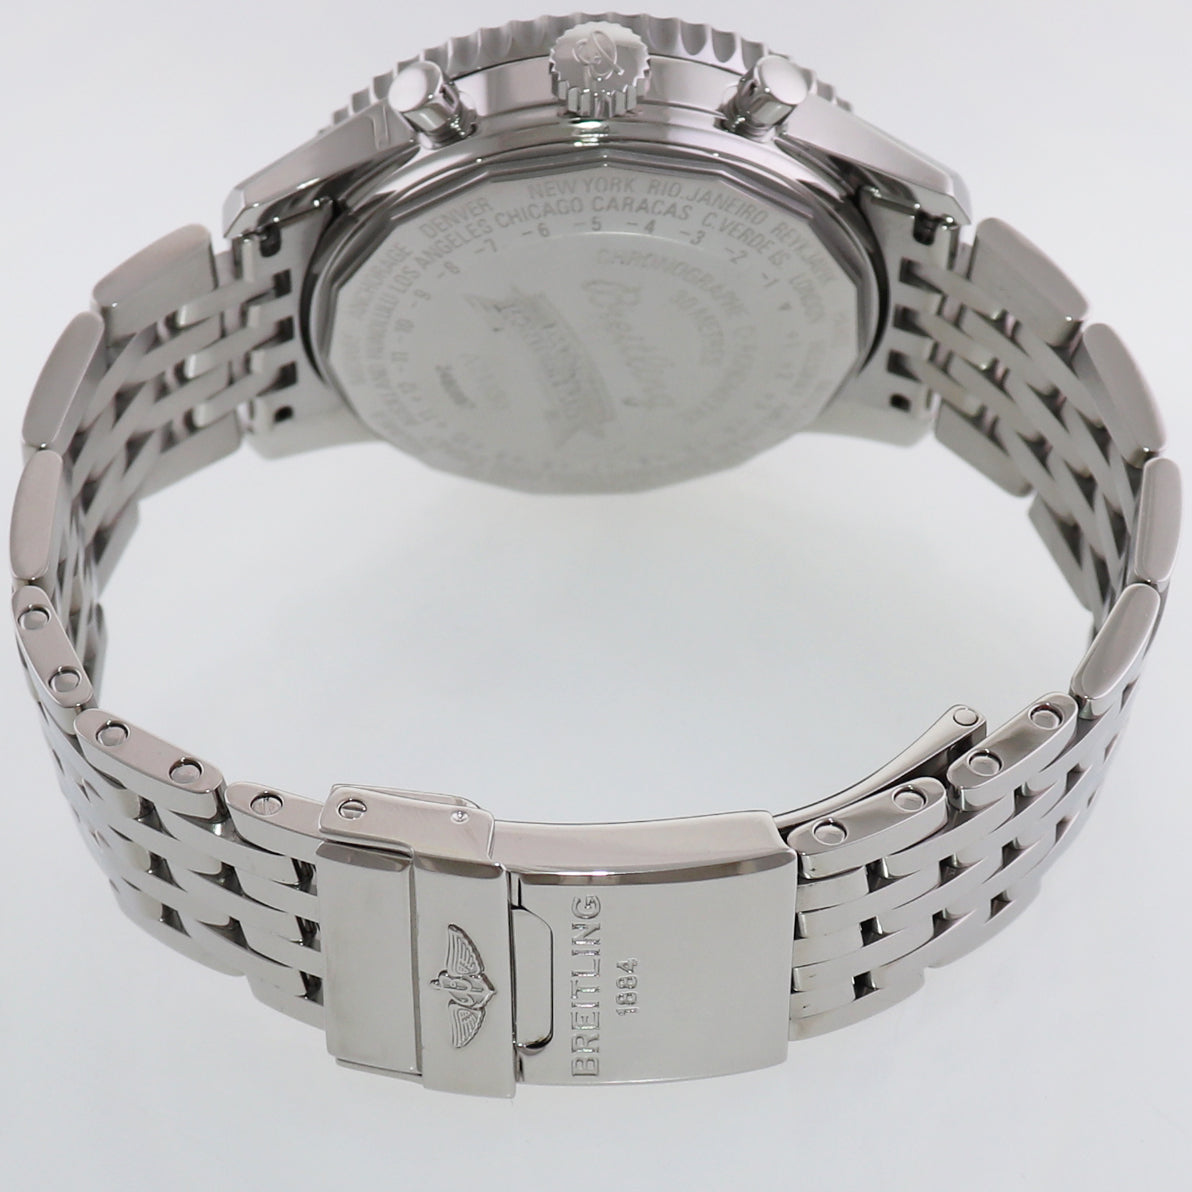 Breitling Navitimer Montbrillant Datora A21330 43mm Steel Chronograph Pilot Watch Box